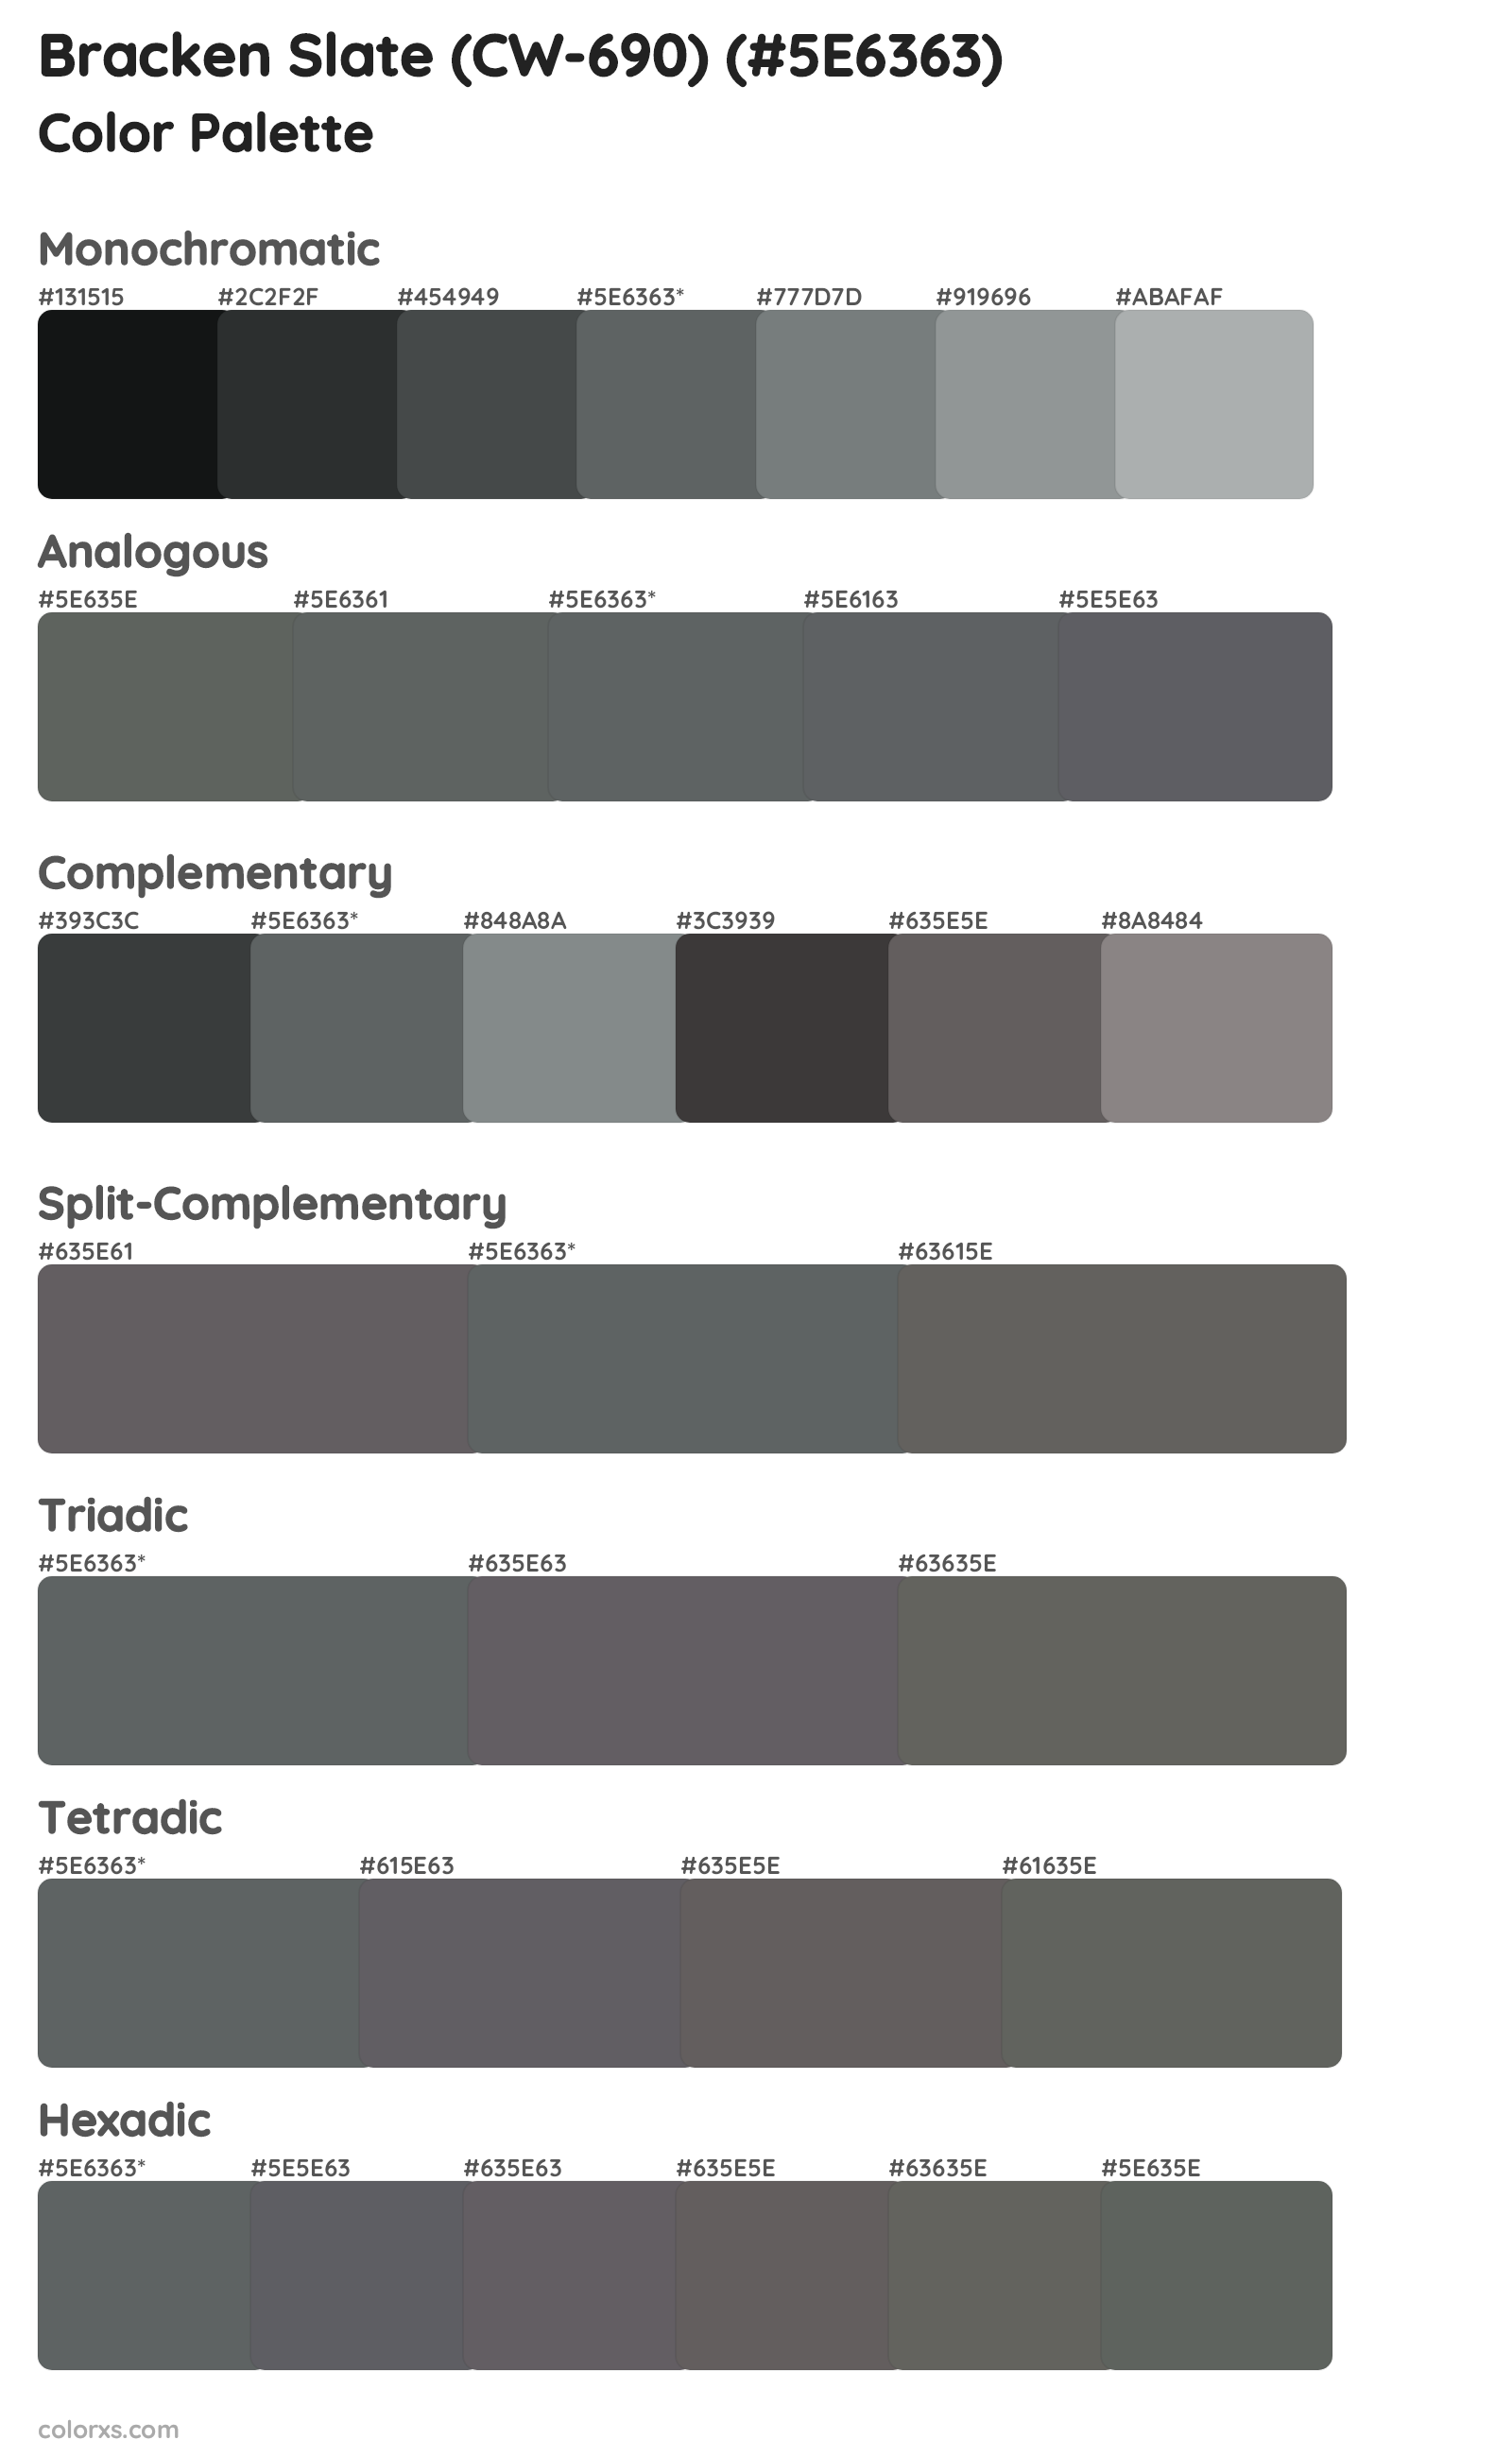 Bracken Slate (CW-690) Color Scheme Palettes